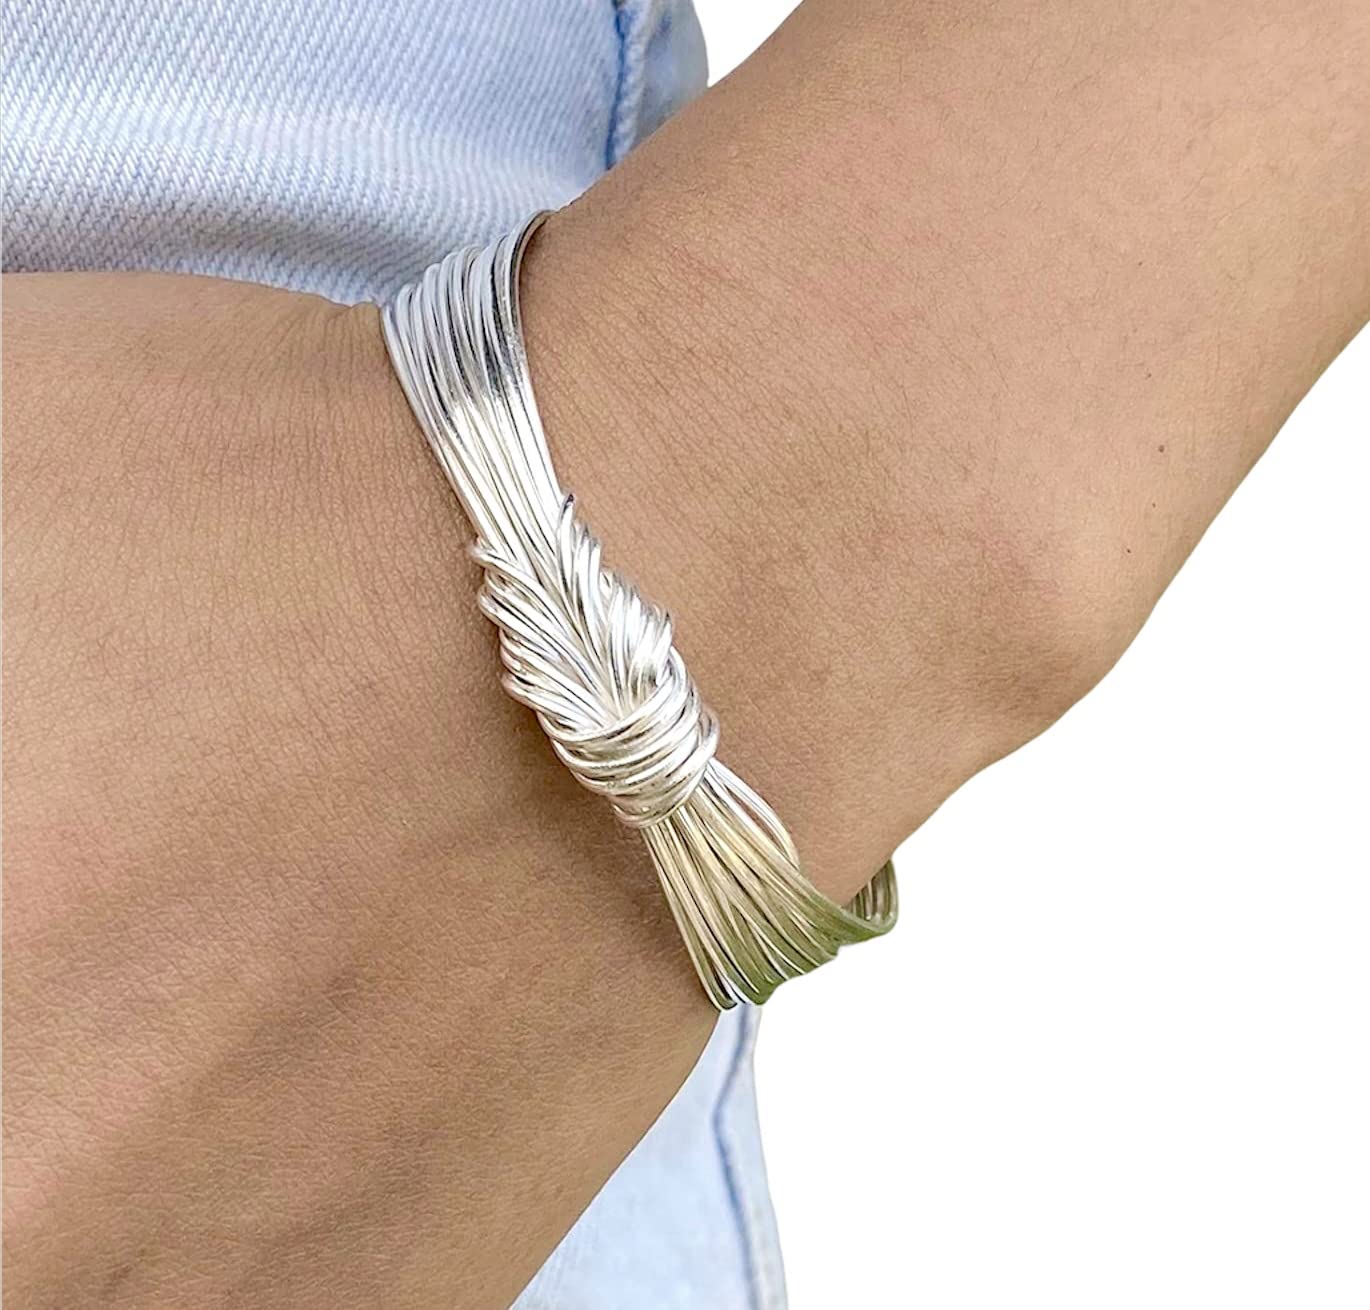 Handmade Sterling Silver Knot Cuff Bracelet